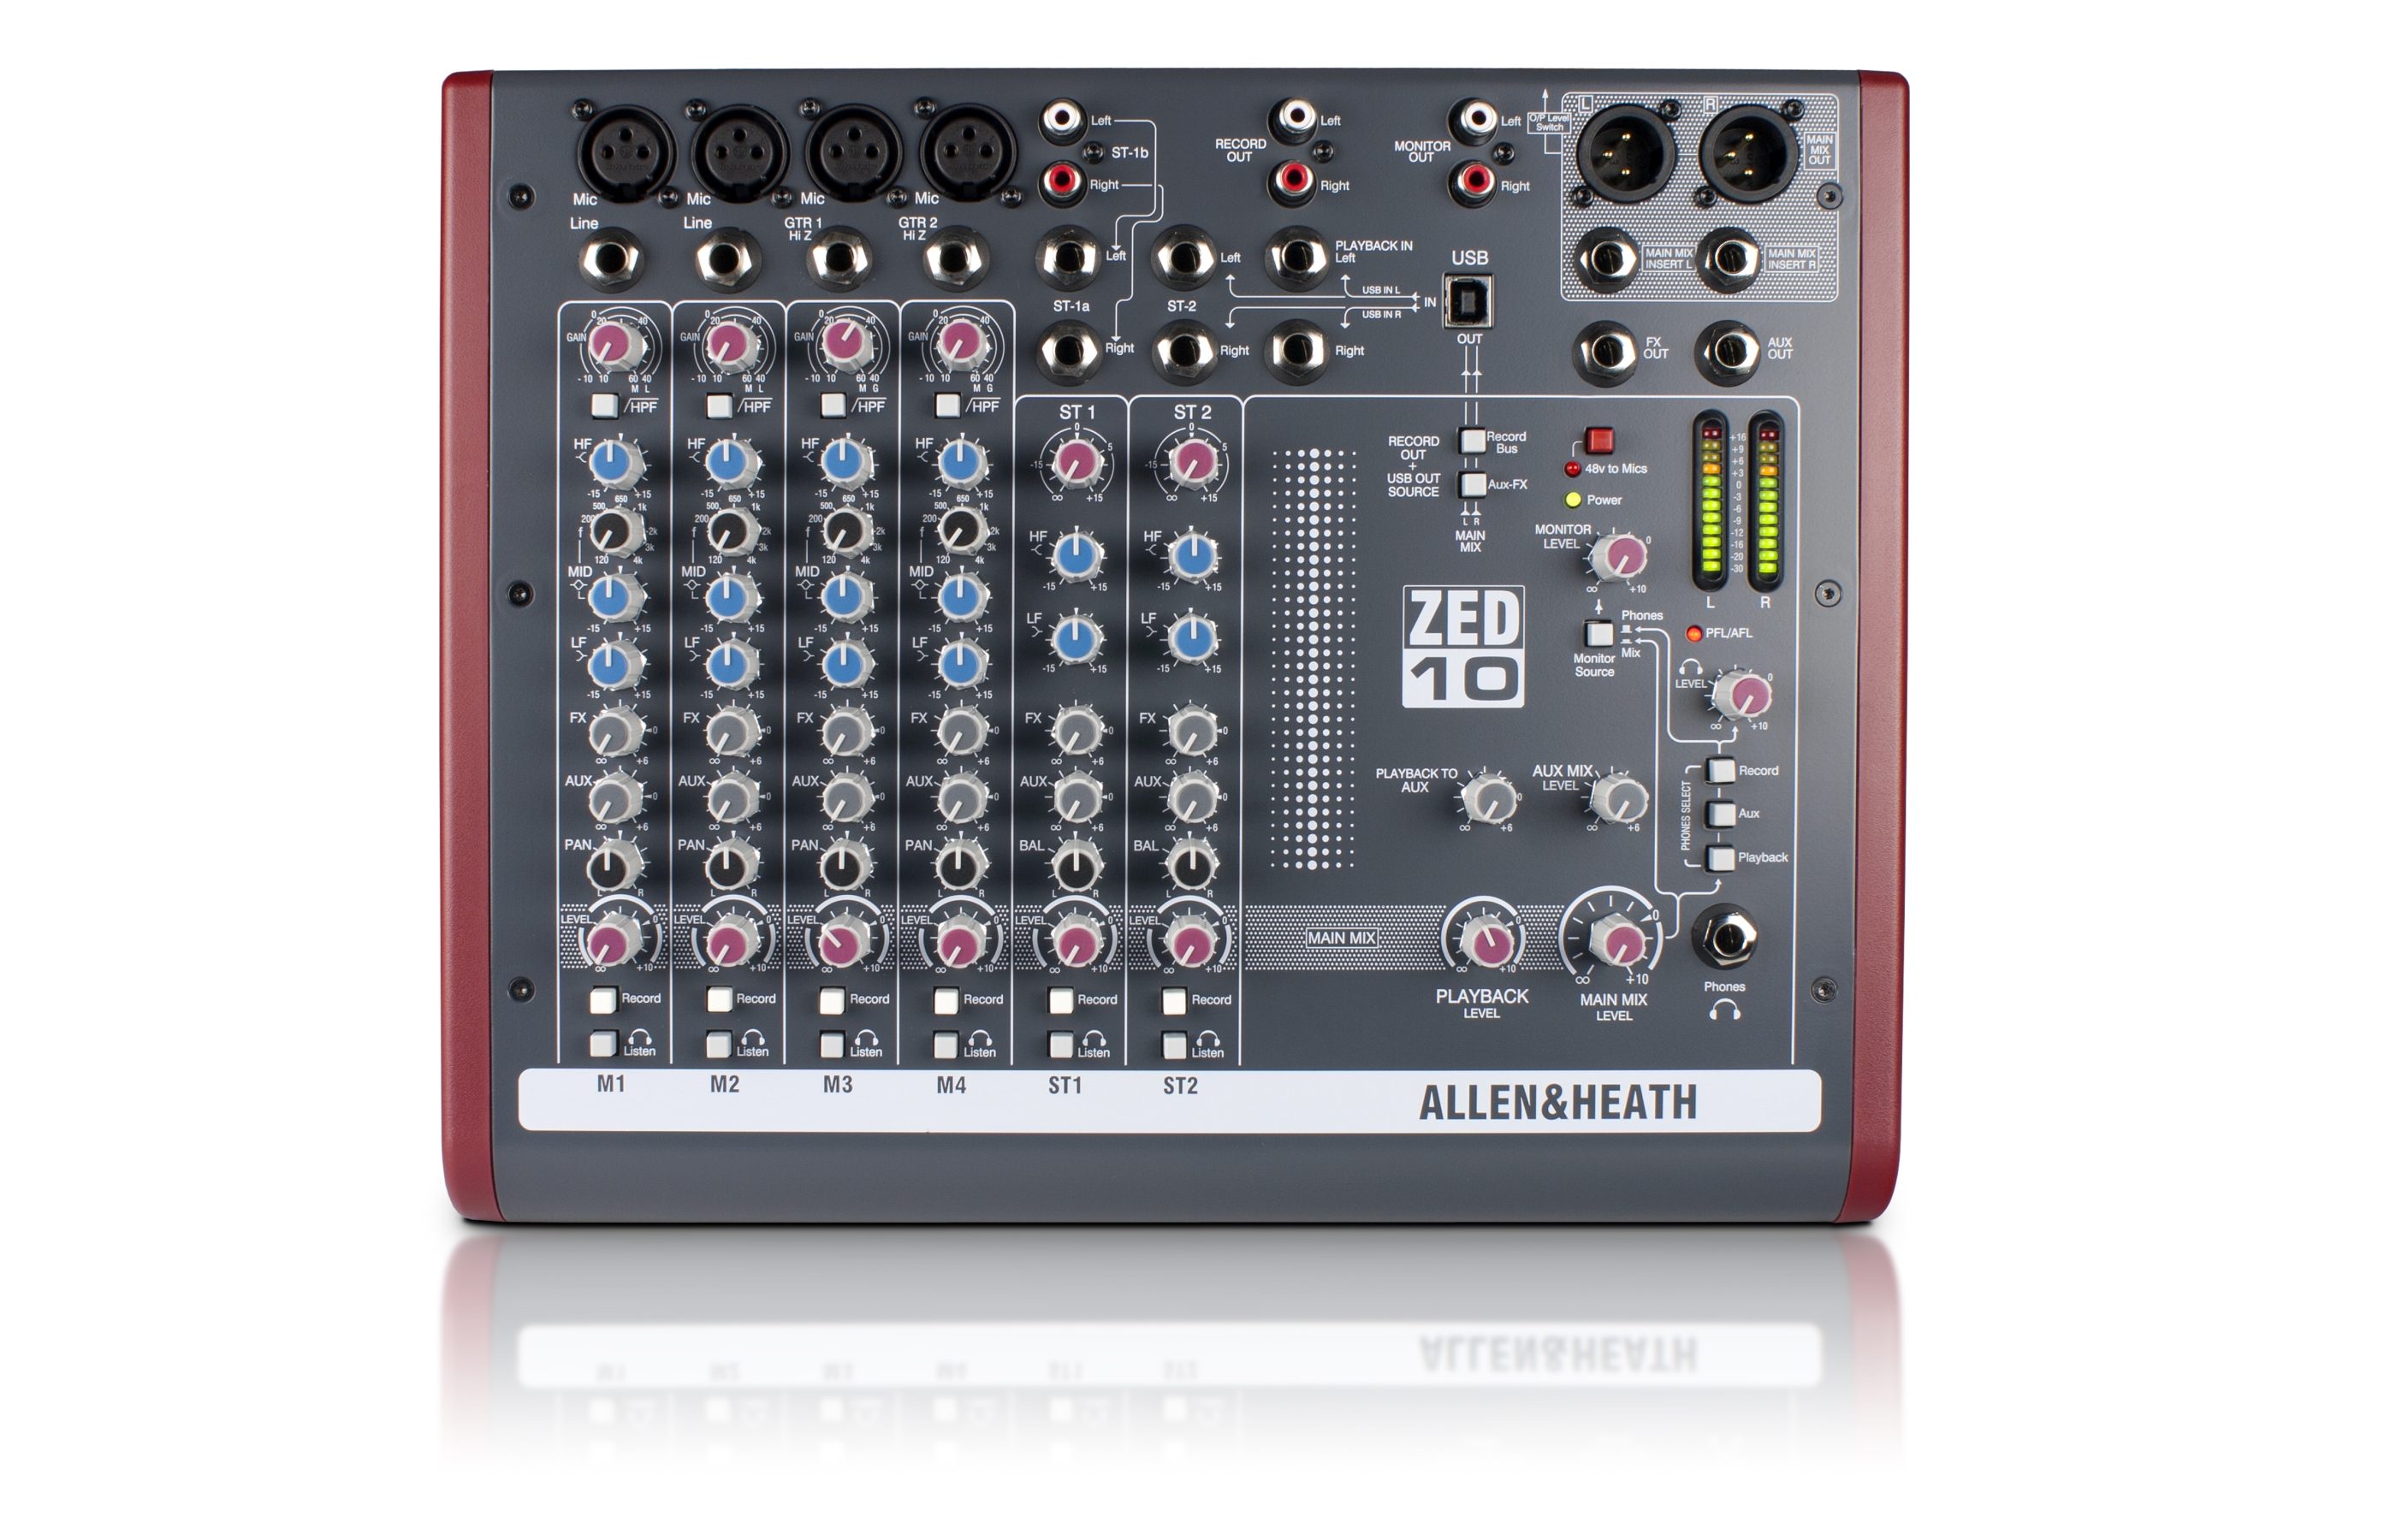 Mixere analogice - Mixer analog Allen & Heath ZED-10, audioclub.ro